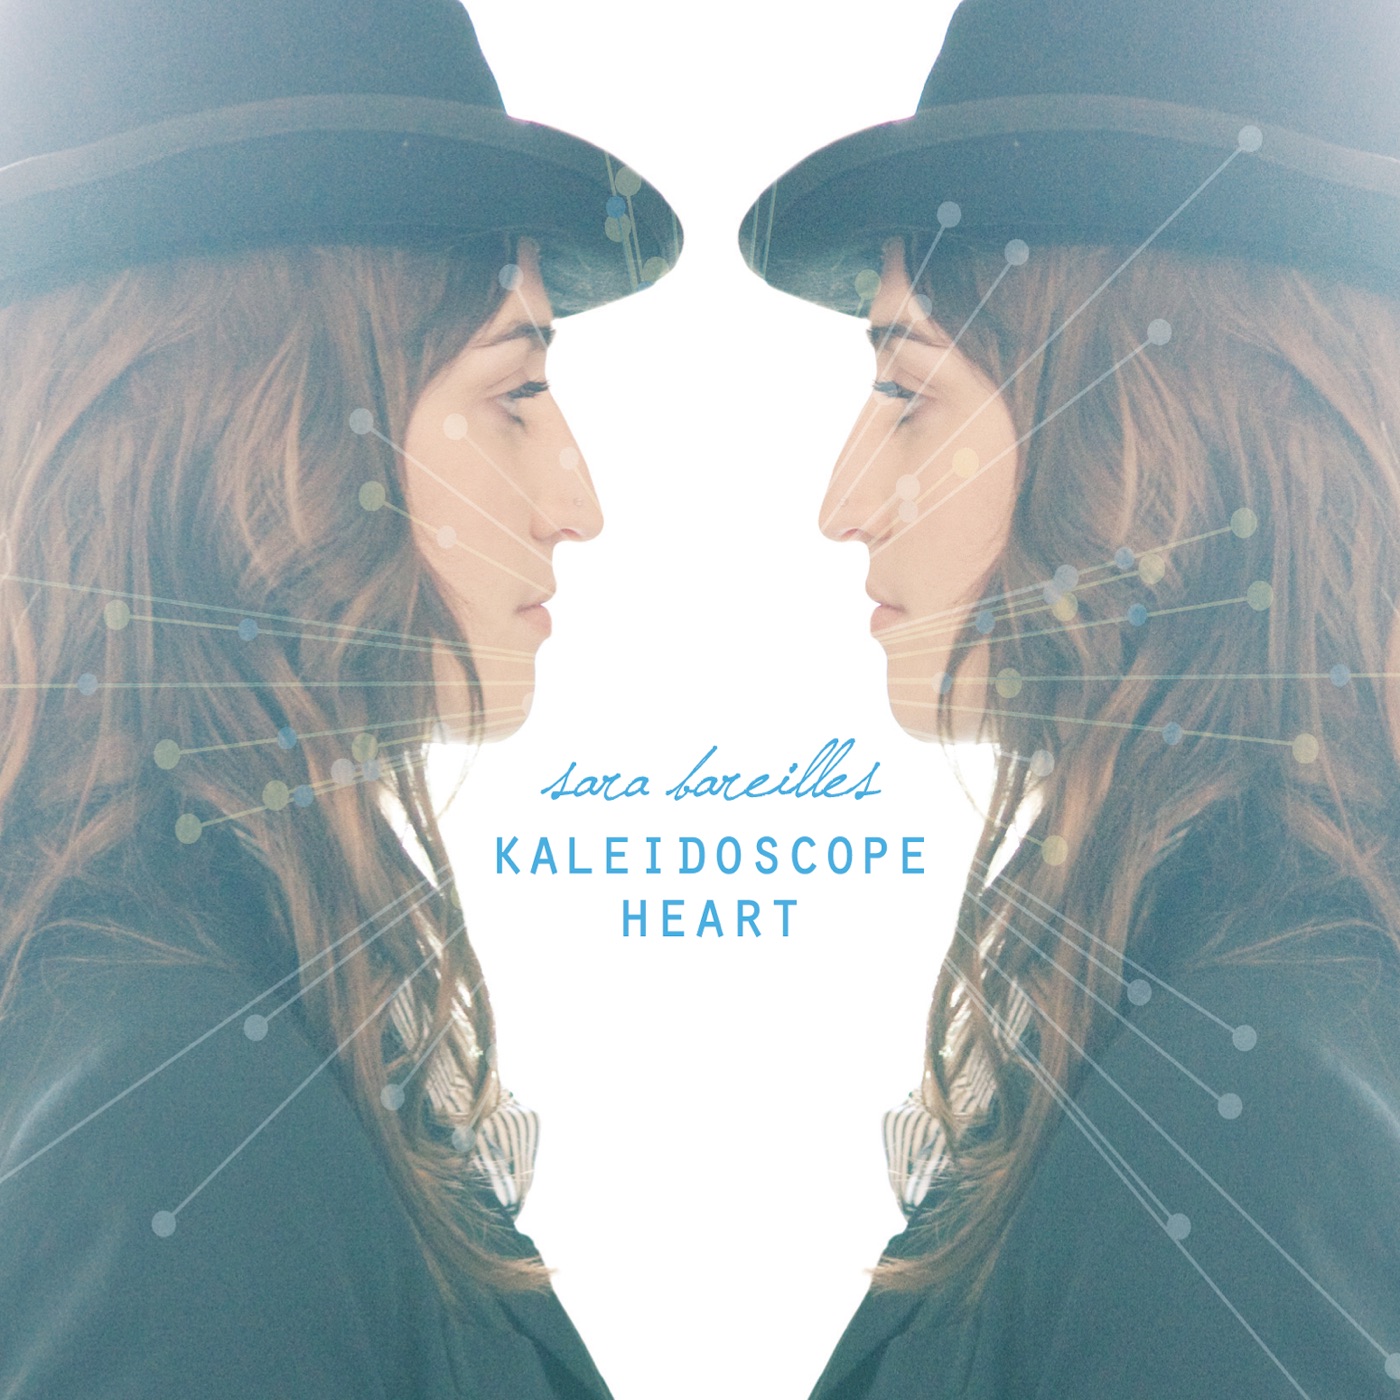 Kaleidoscope Heart by Sara Bareilles